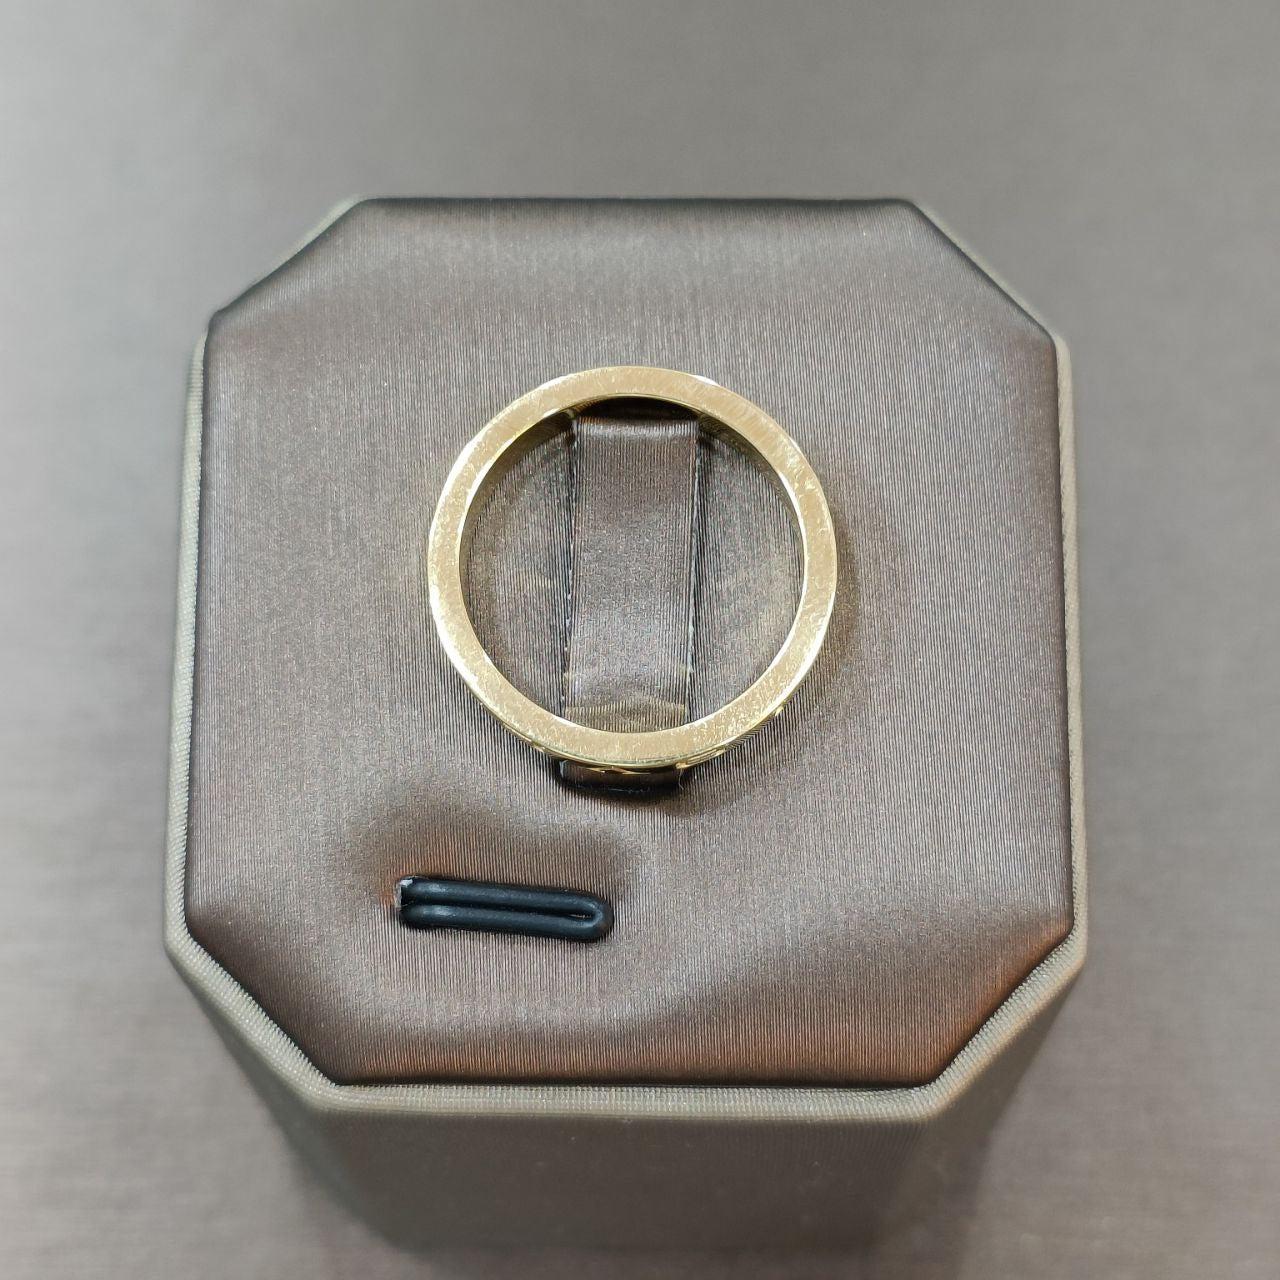 22k / 916 Gold B Design Ring V2-Rings-Best Gold Shop